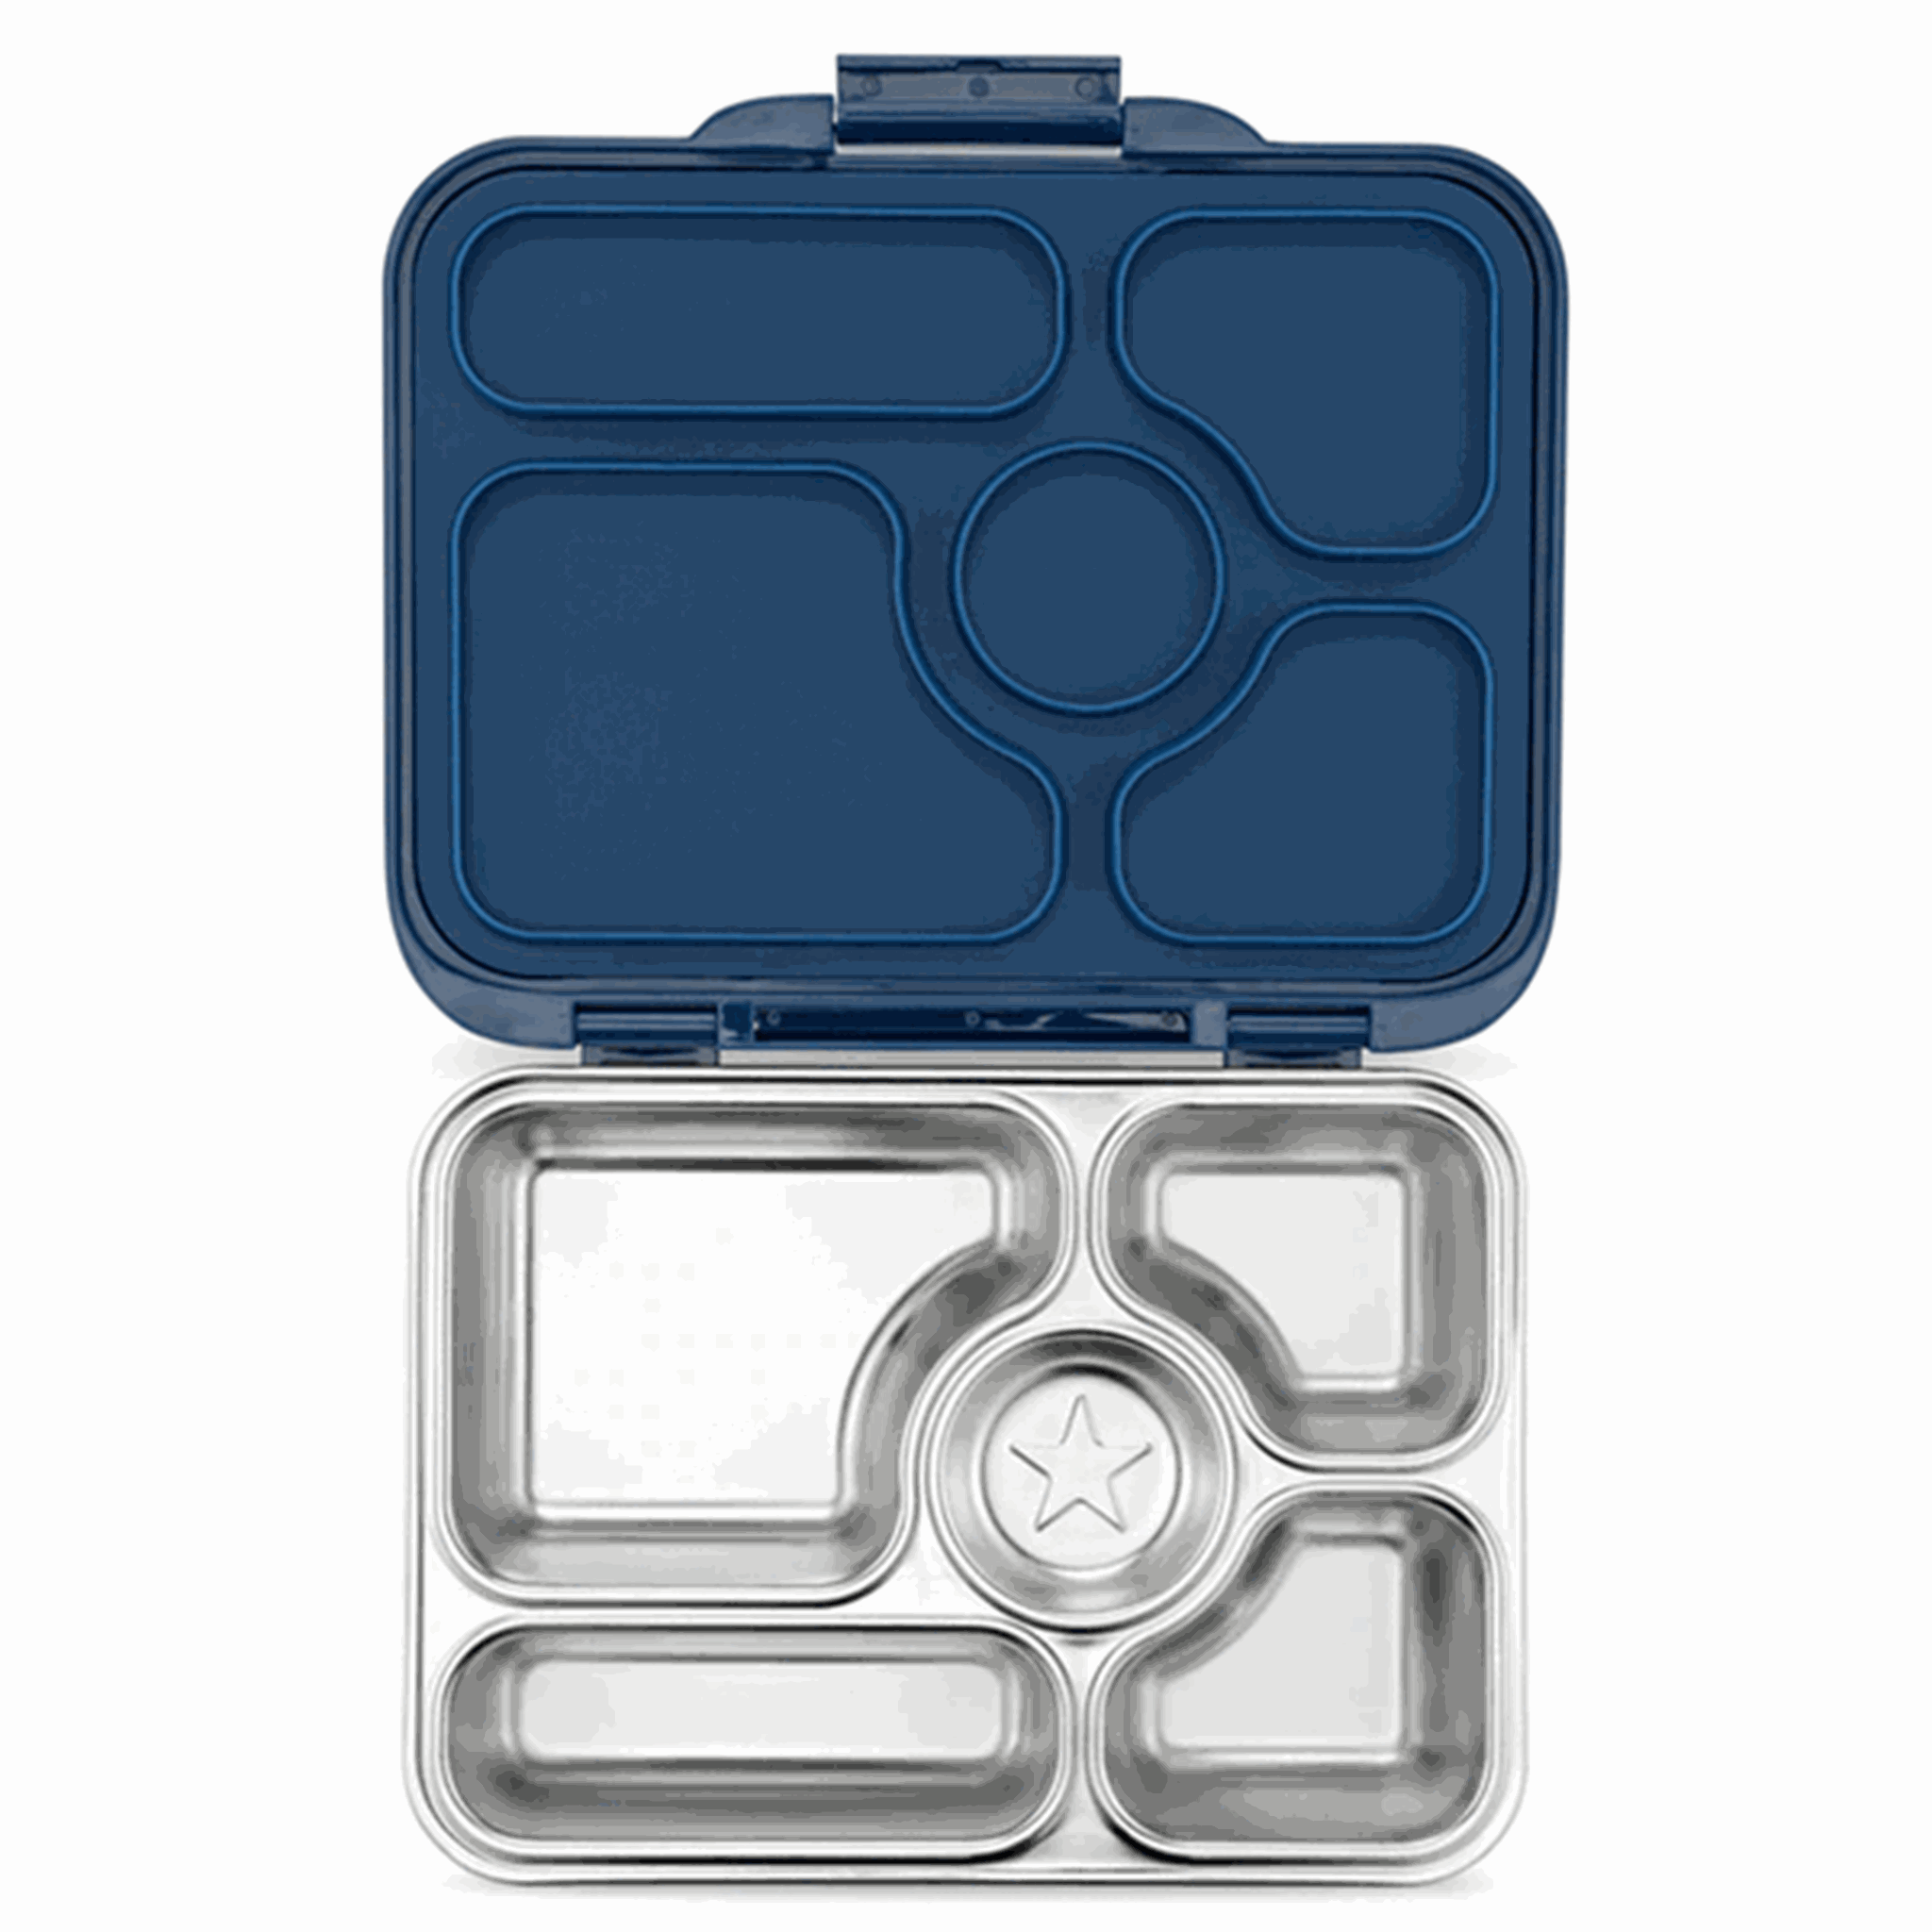 Yumbox Presto Stainless Steel Lunch Box Santa Fe Blue 5